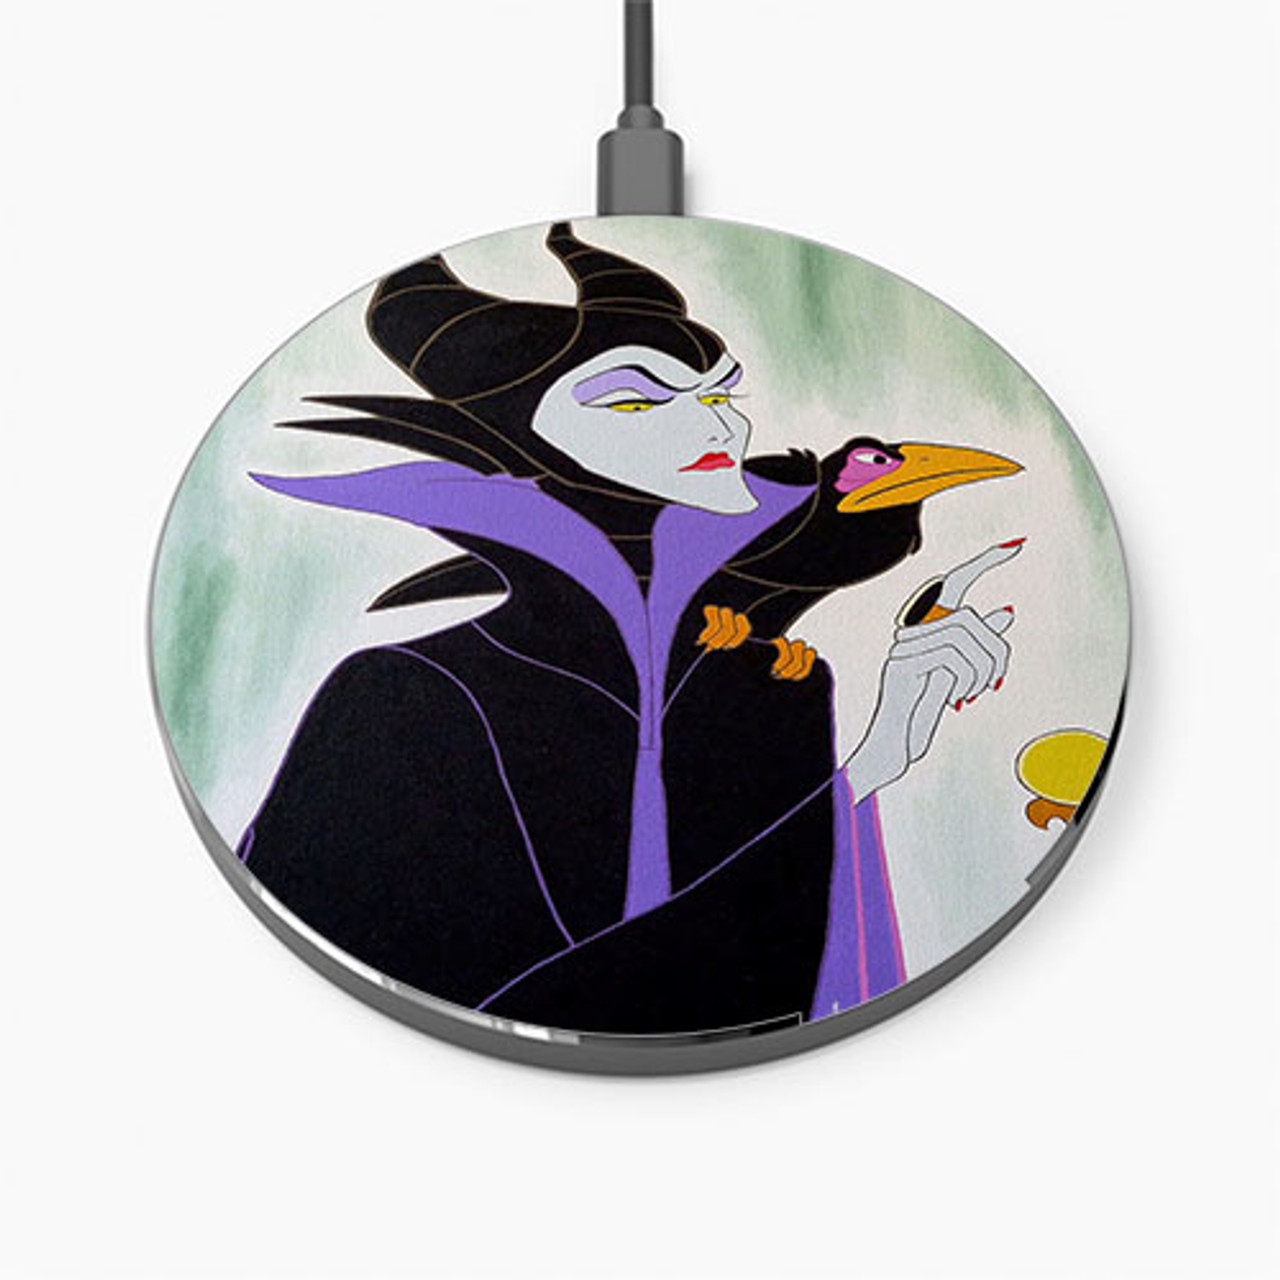 Maleficent (Disney Villains)